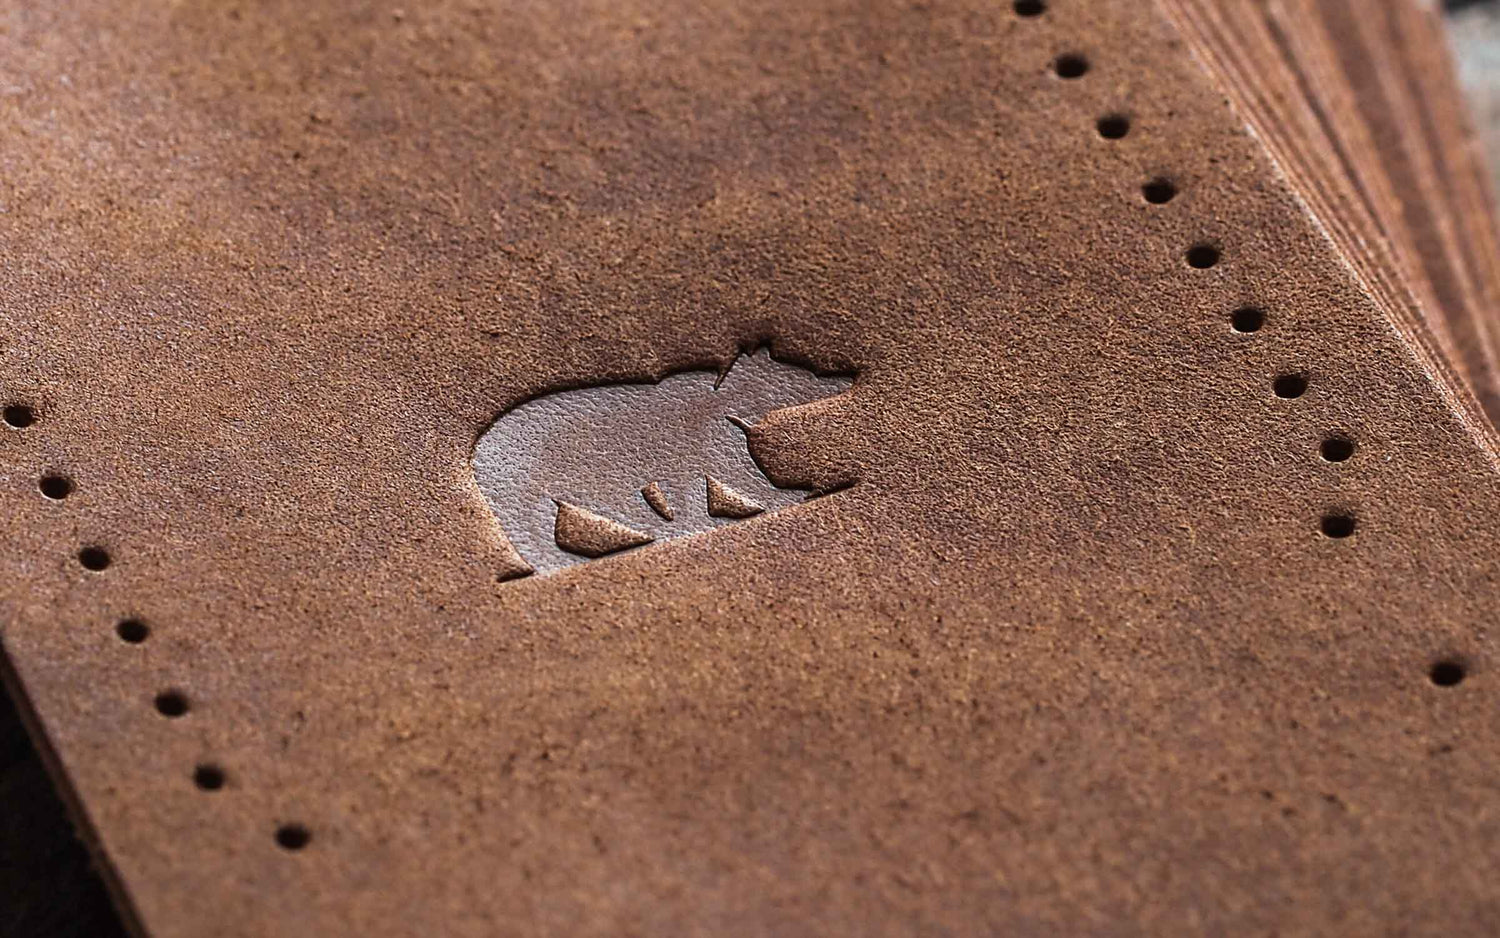 Luava handmade leather product for businesses like Partioaitta